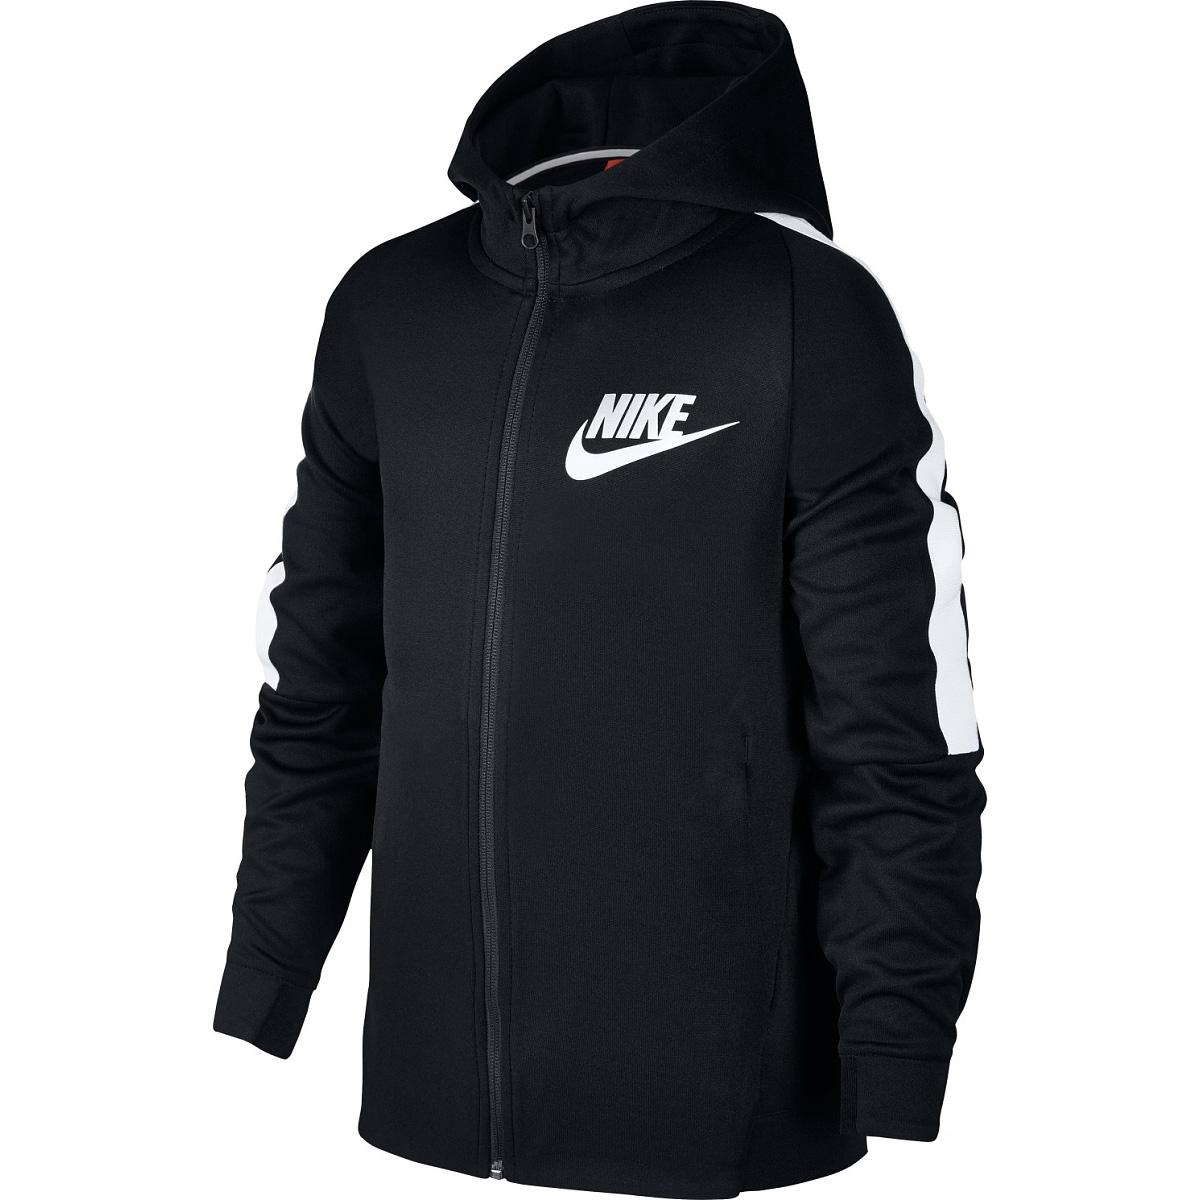 Nike Boys Youth Tribute Jacket - Black - Tennisnuts.com